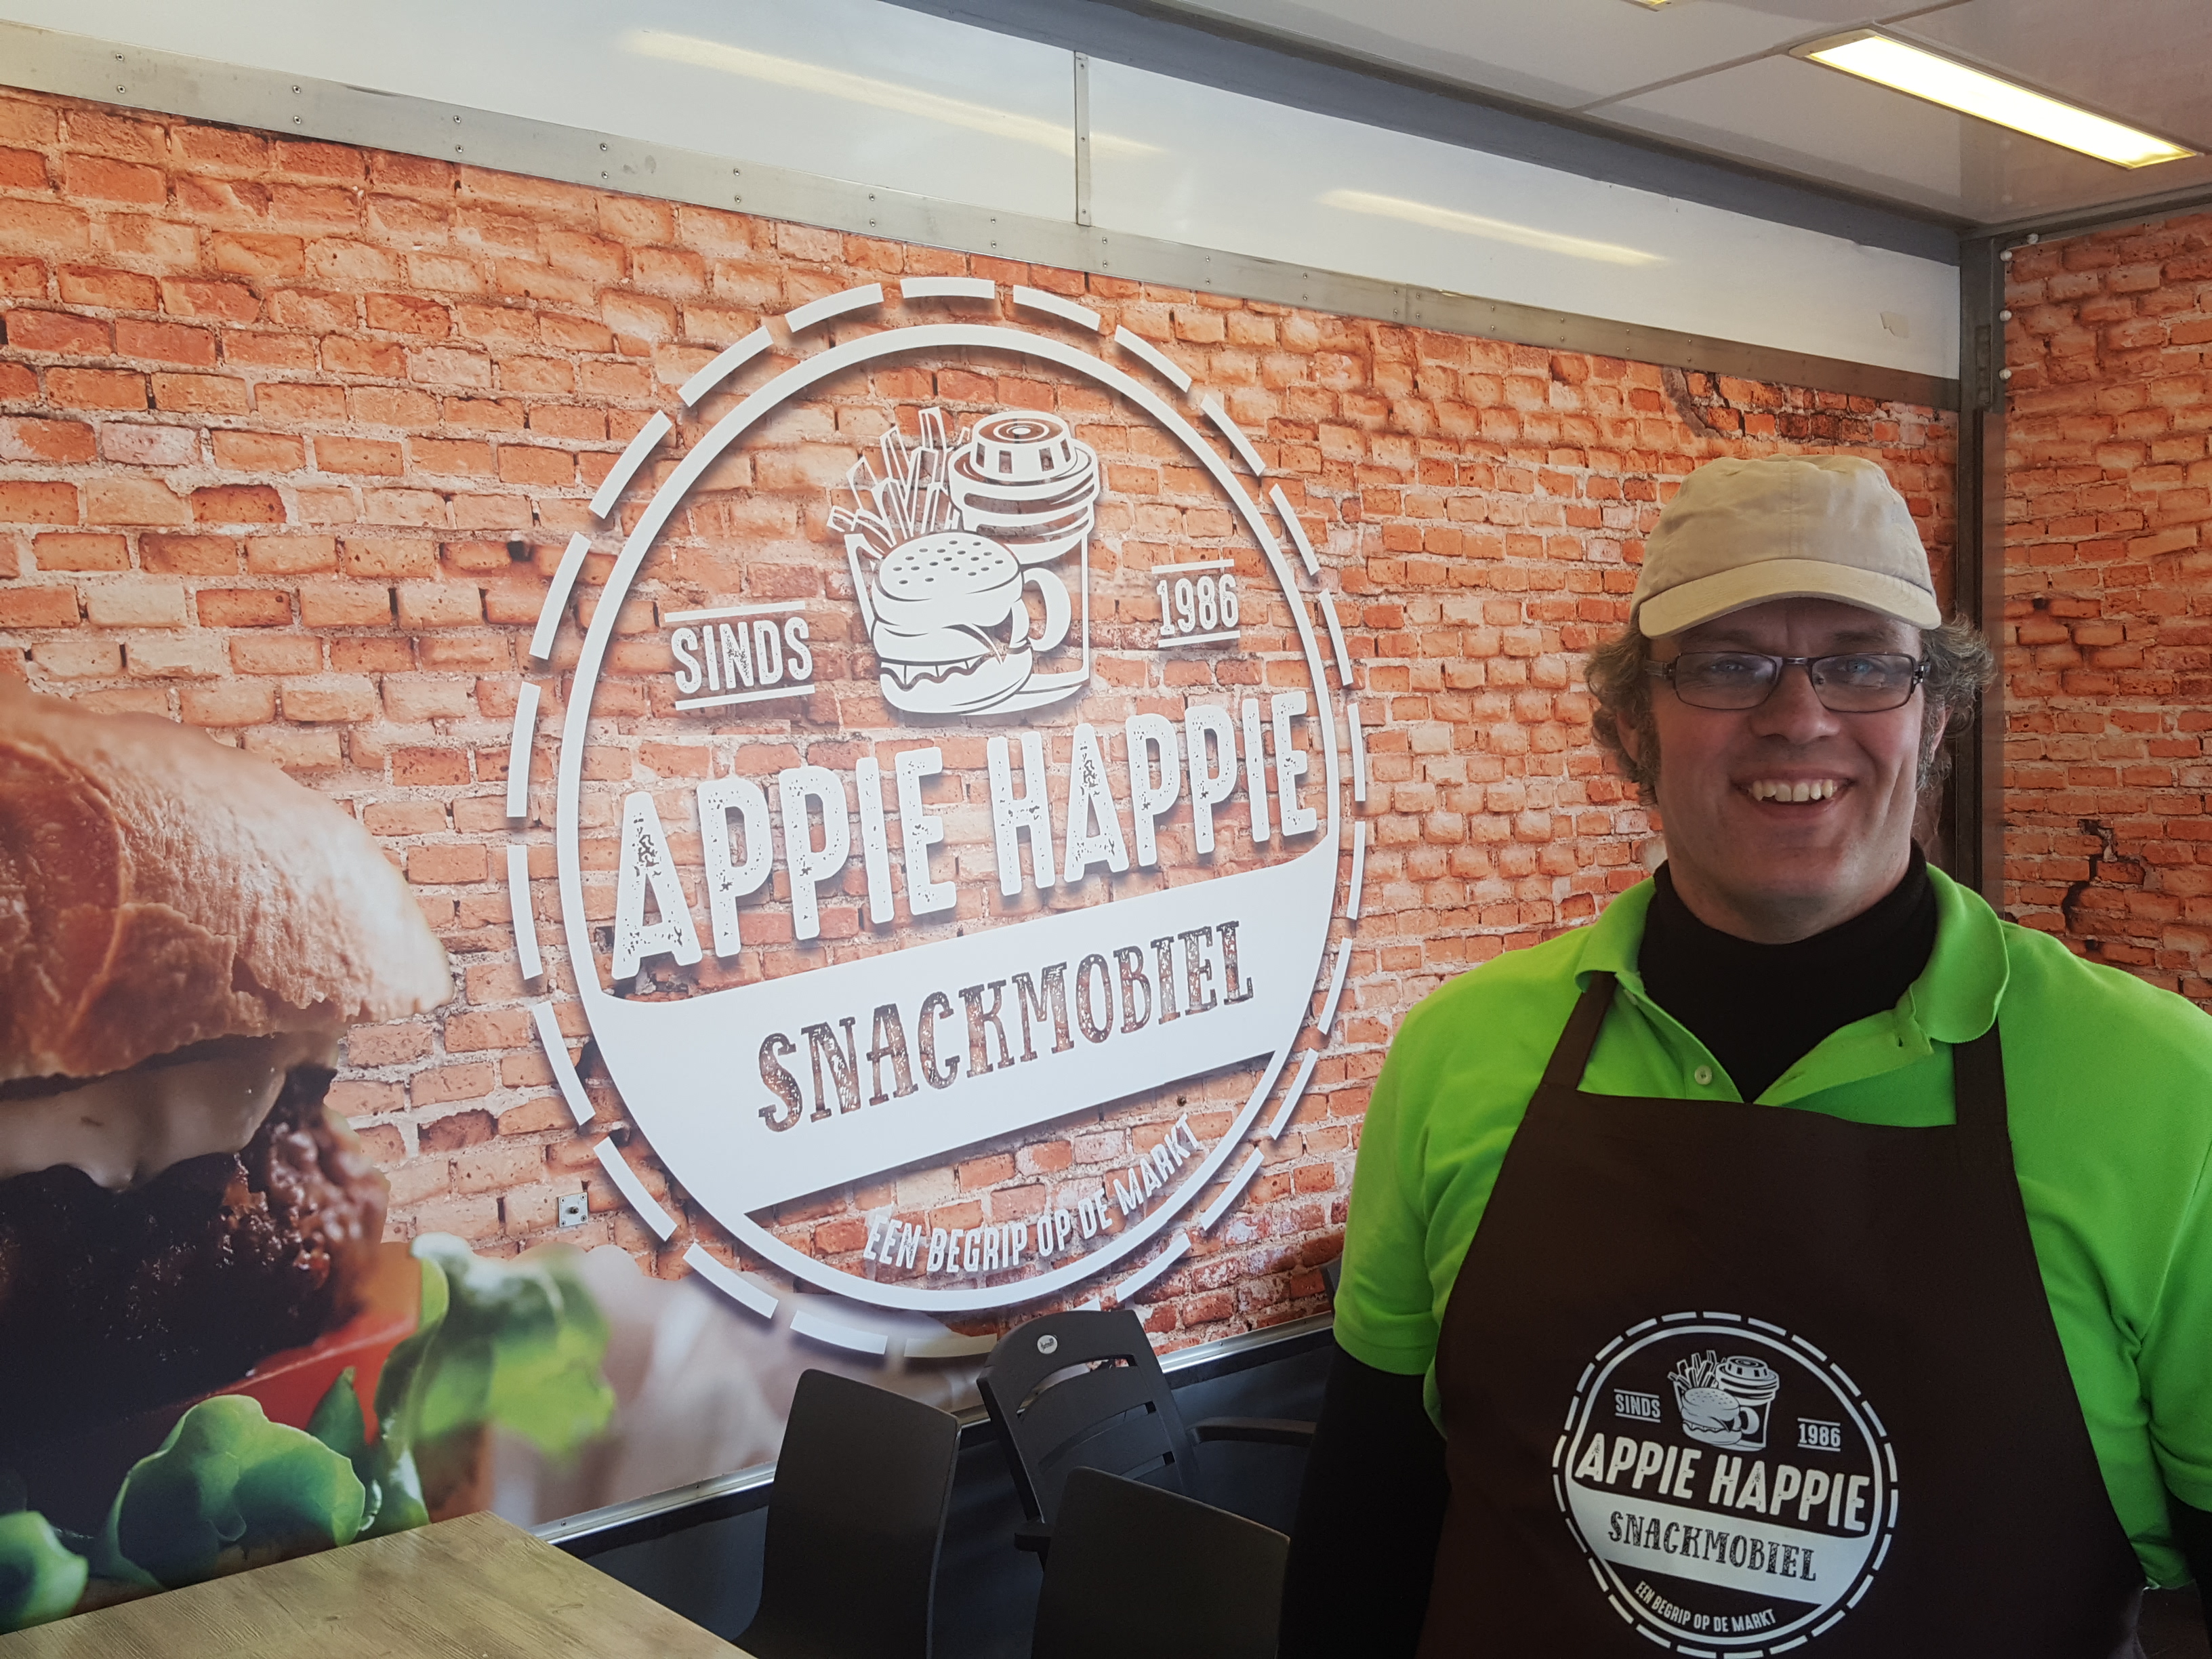 Appie Happie Snackmobiel